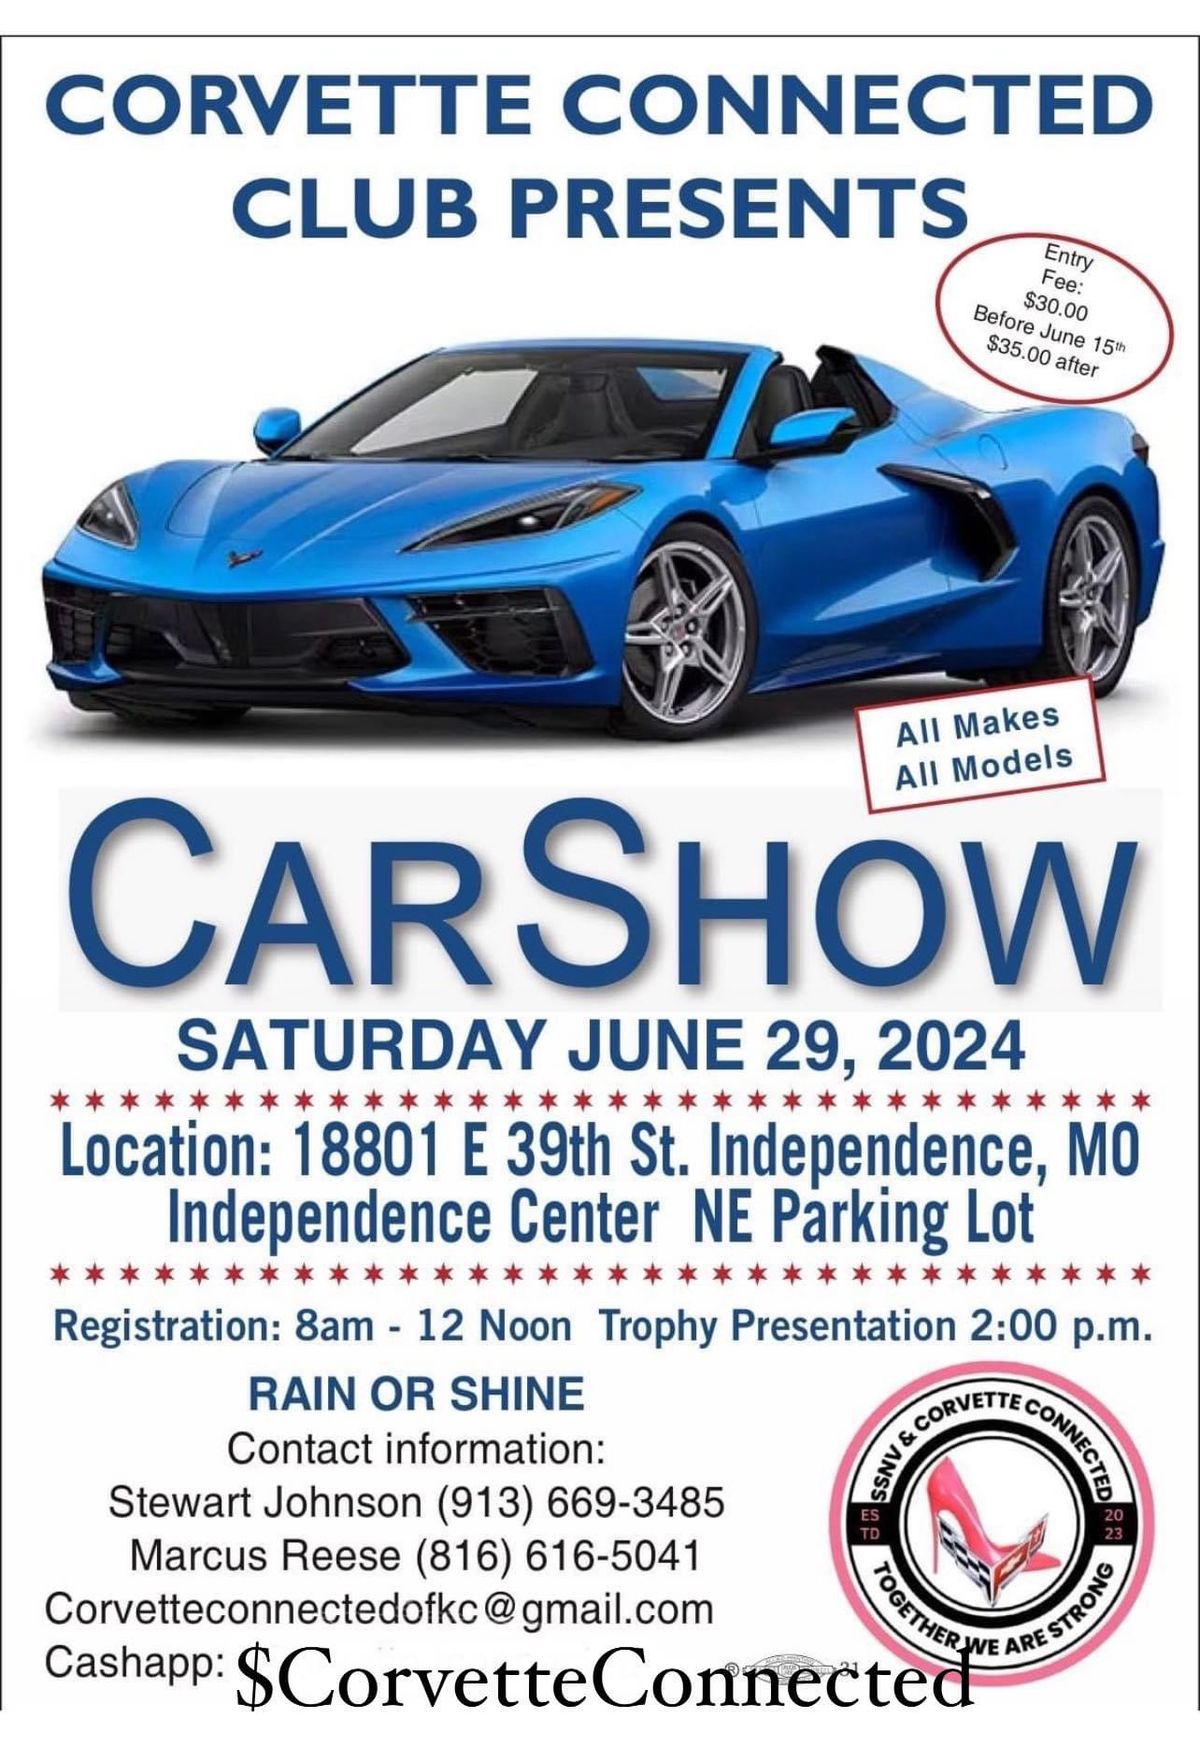 Annual Corvette connected car show